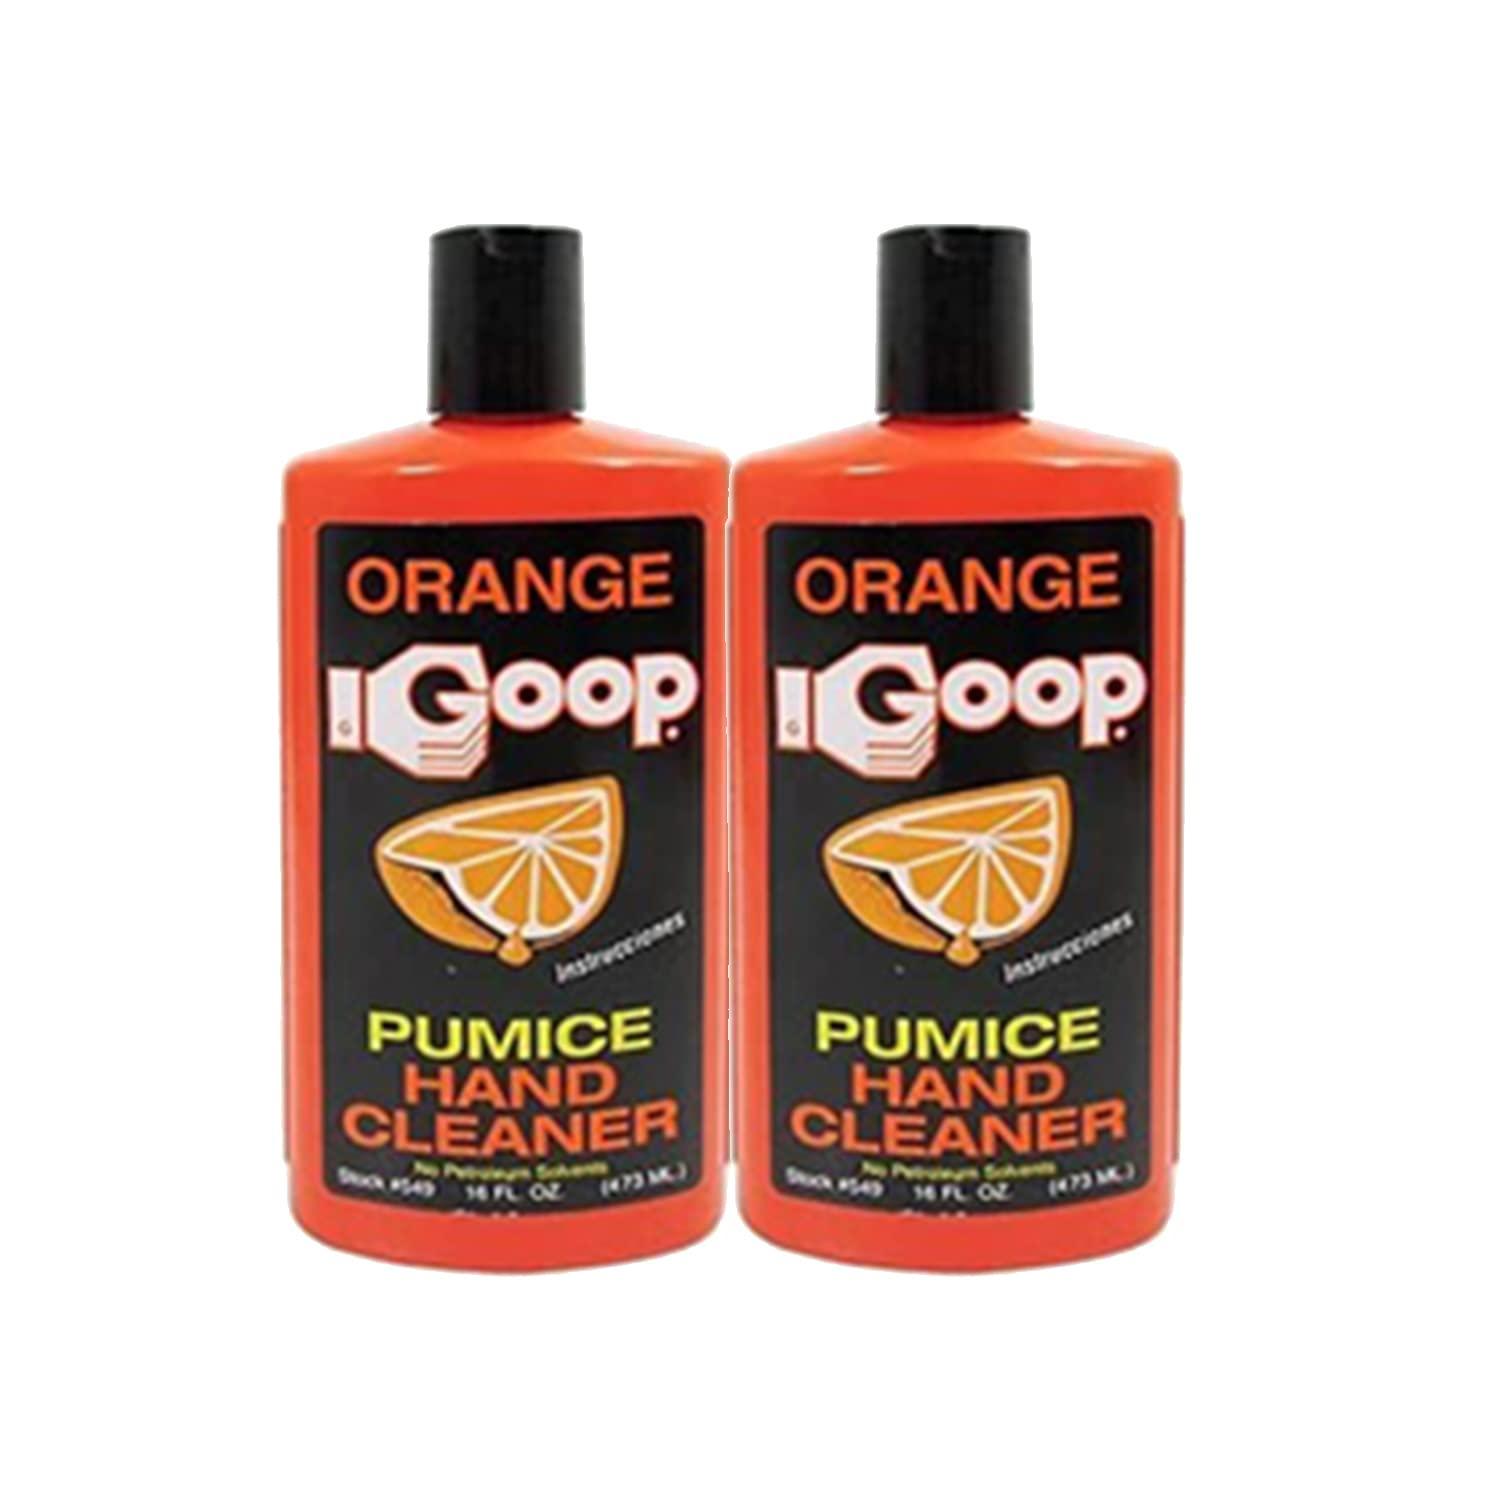 Goop Orange Liquid Hand Cleaner with Pumice - 1 Gallon